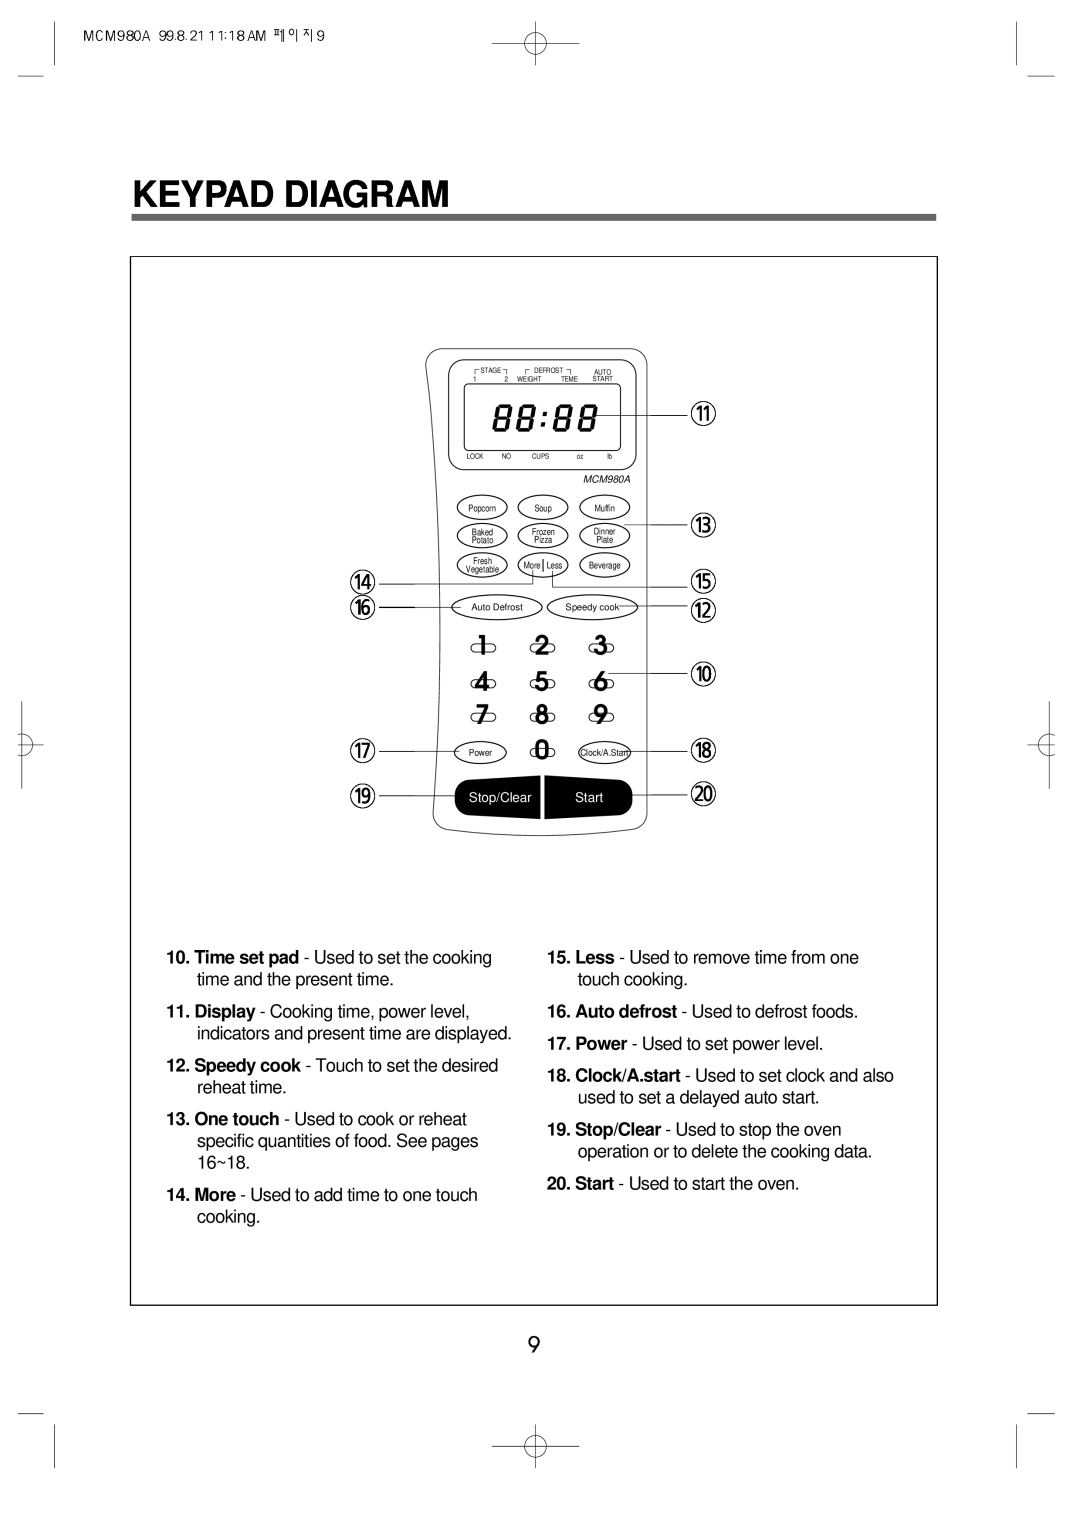 Daewoo MCM980A manual Keypad Diagram 